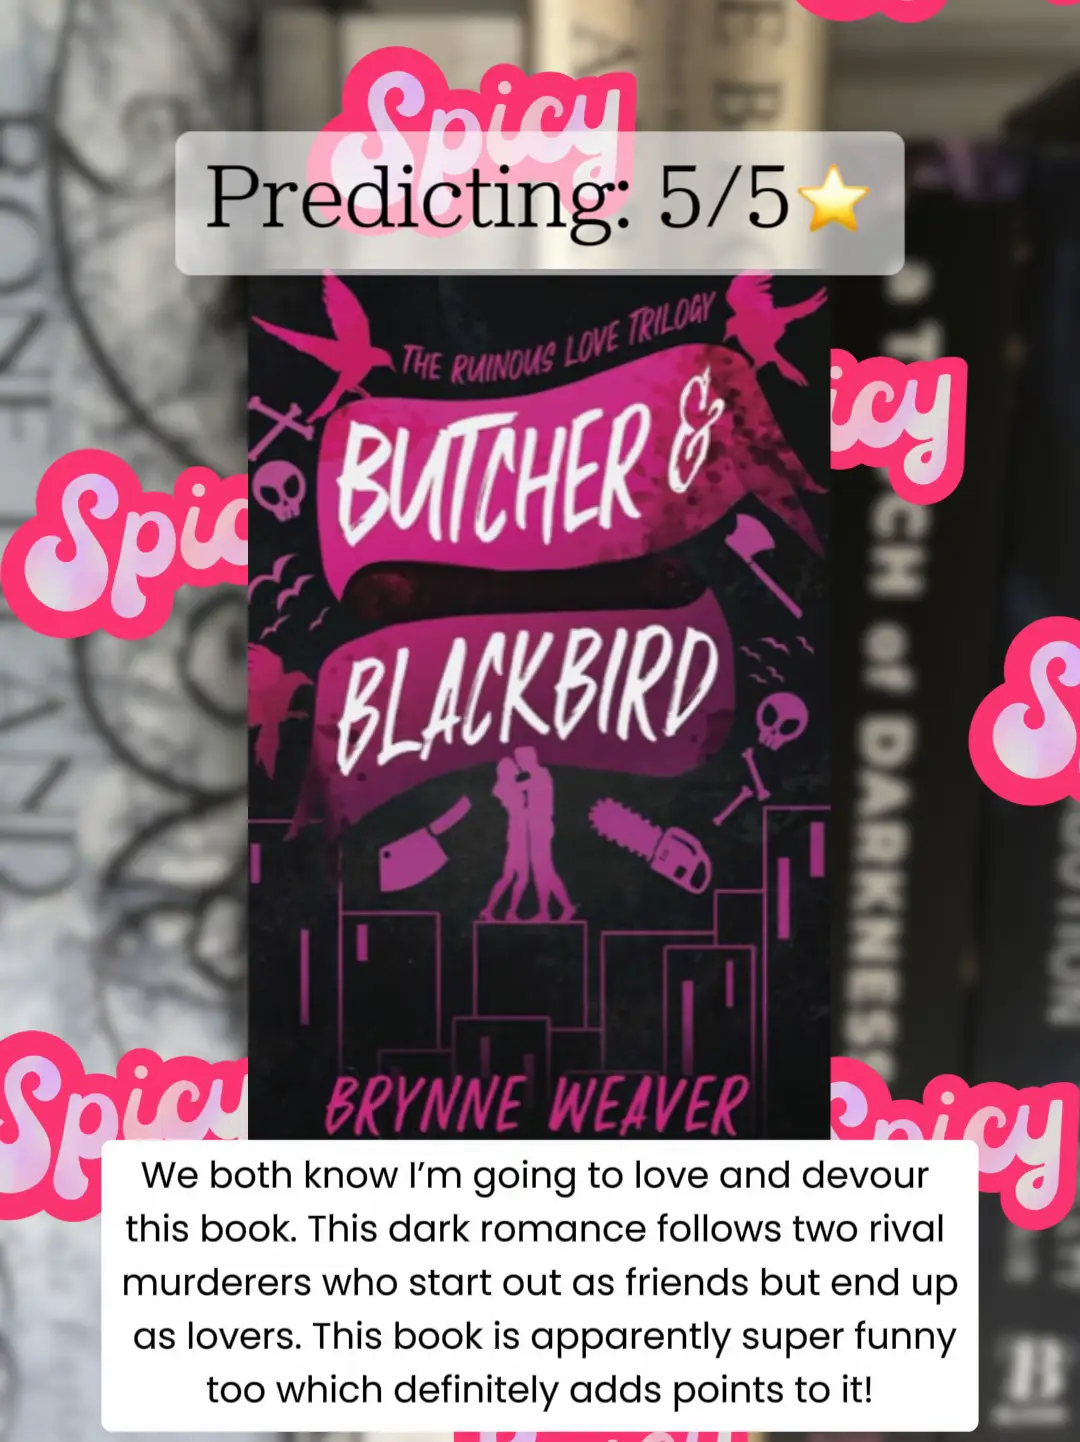 Butcher & Blackbird (The Ruinous Love Trilogy, #1) by Brynne